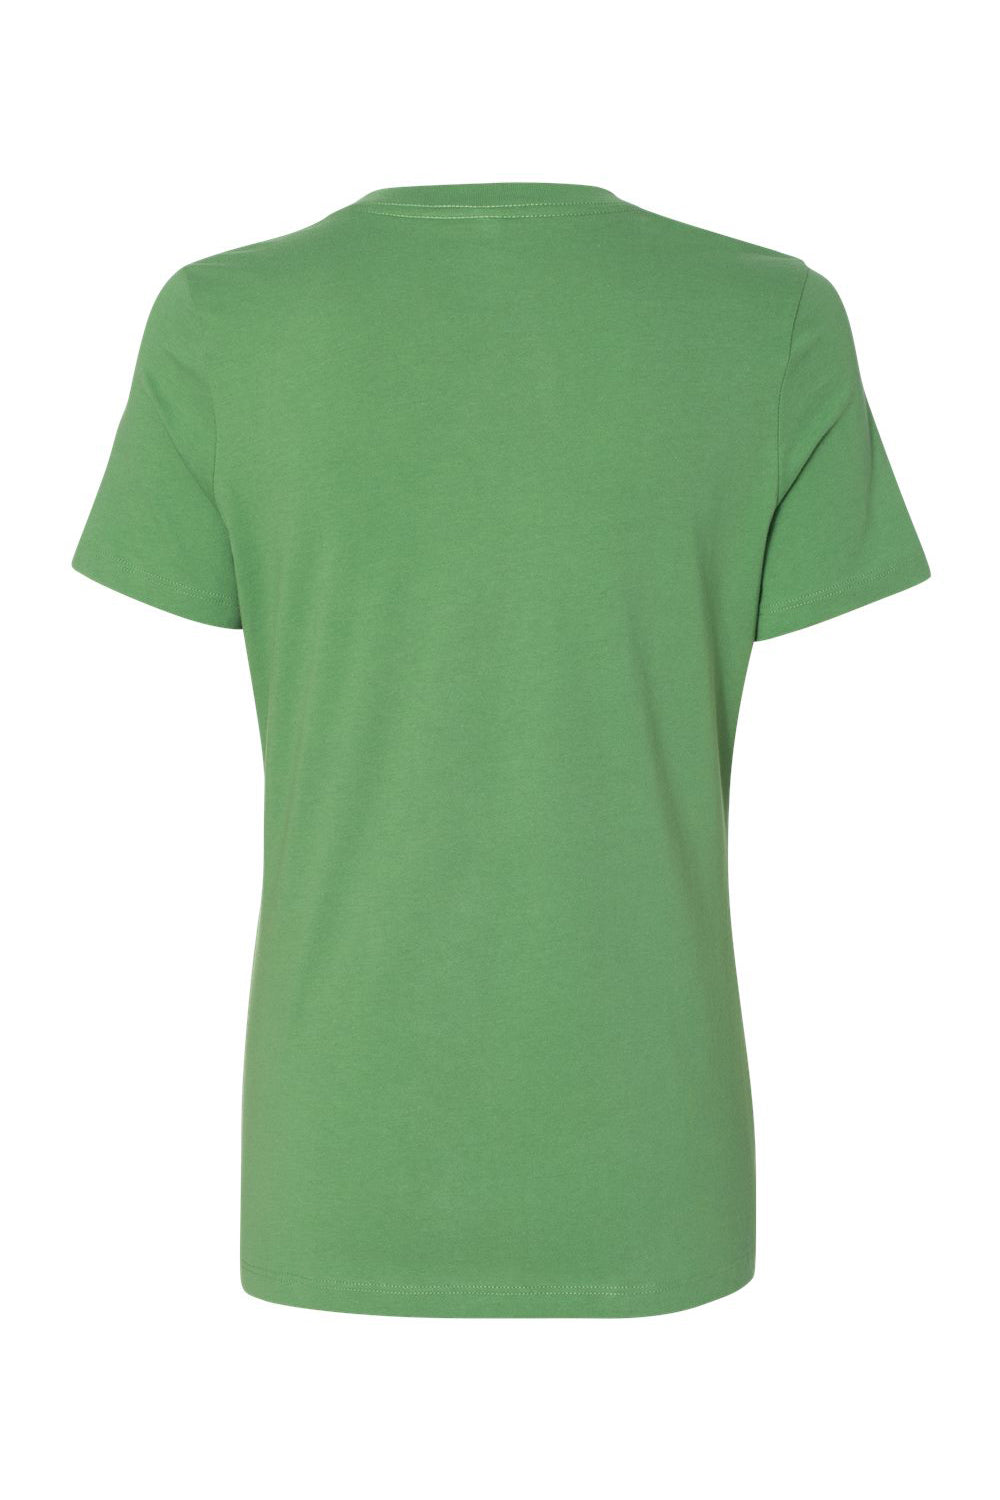 Bella + Canvas BC6400/B6400/6400 Womens Relaxed Jersey Short Sleeve Crewneck T-Shirt Leaf Green Flat Back